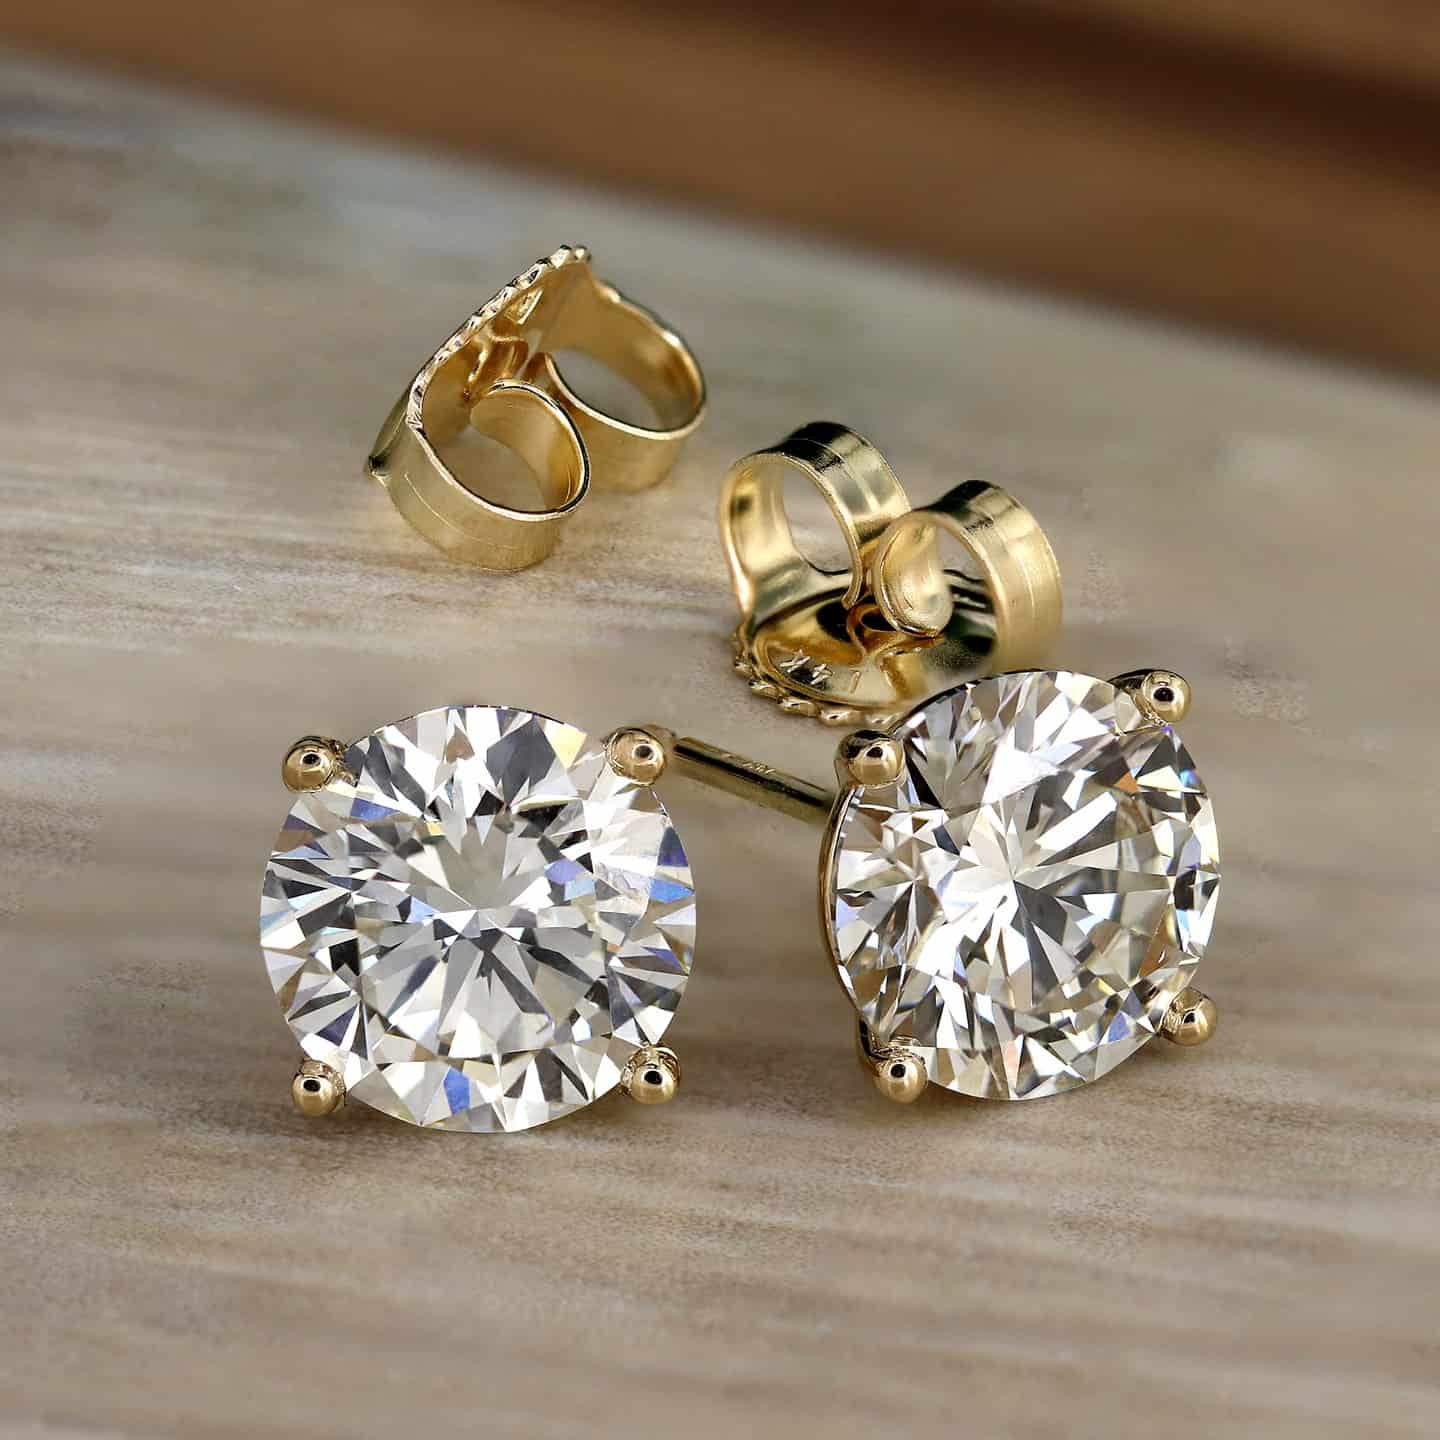 Diamond stud earrings for your diamond colleciton